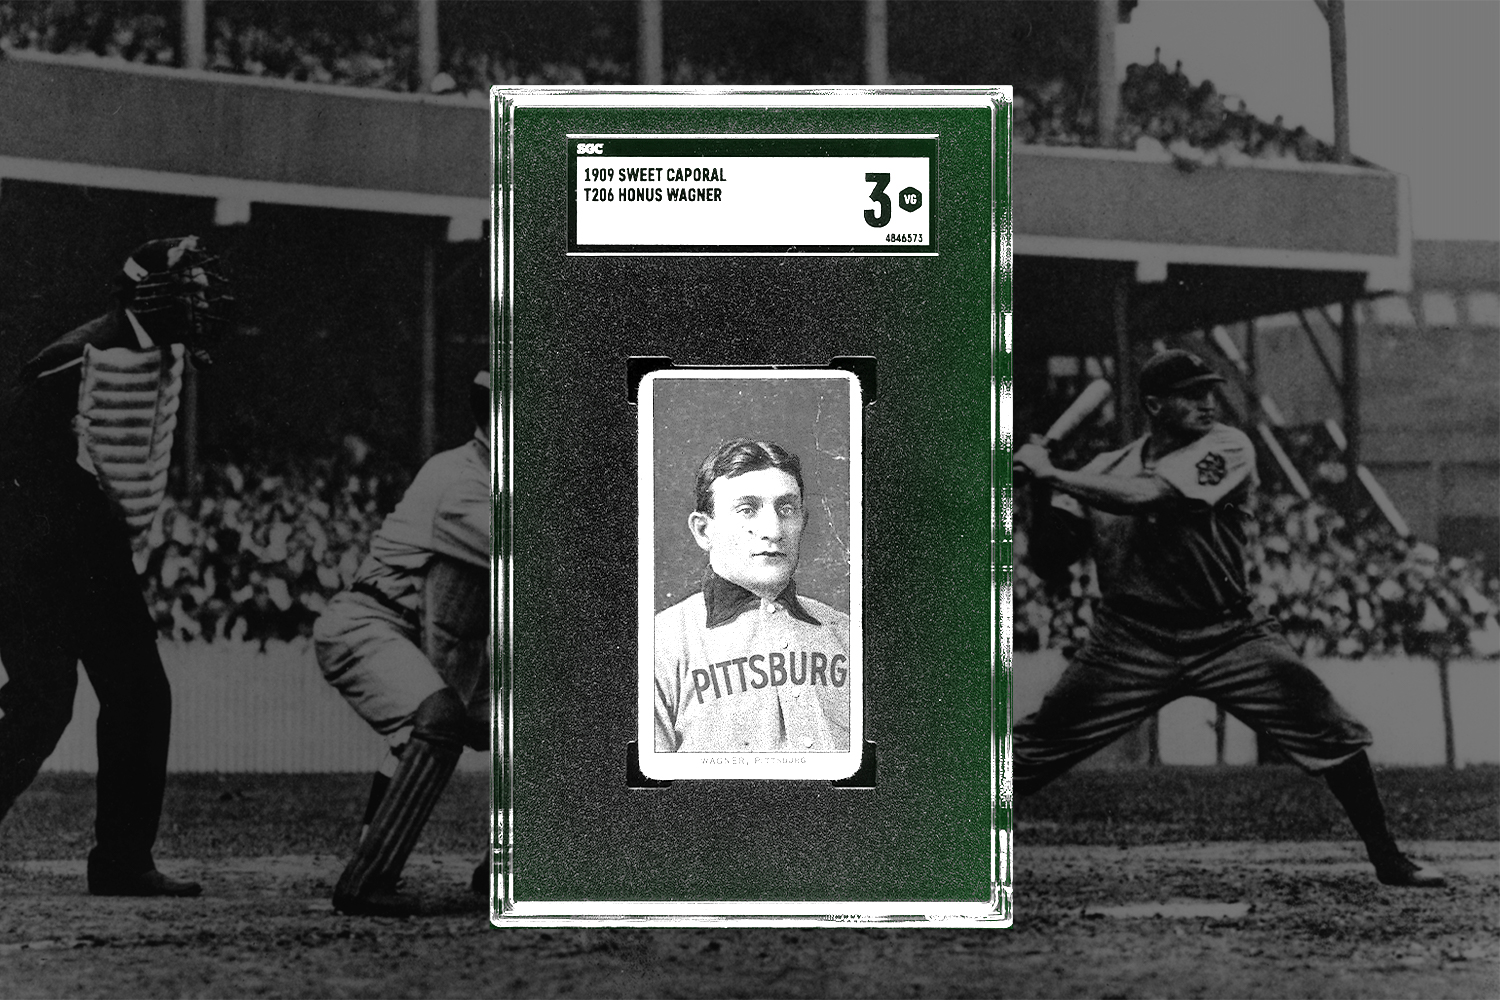 Rare Honus Wagner baseball card sells for record $6.6 million at